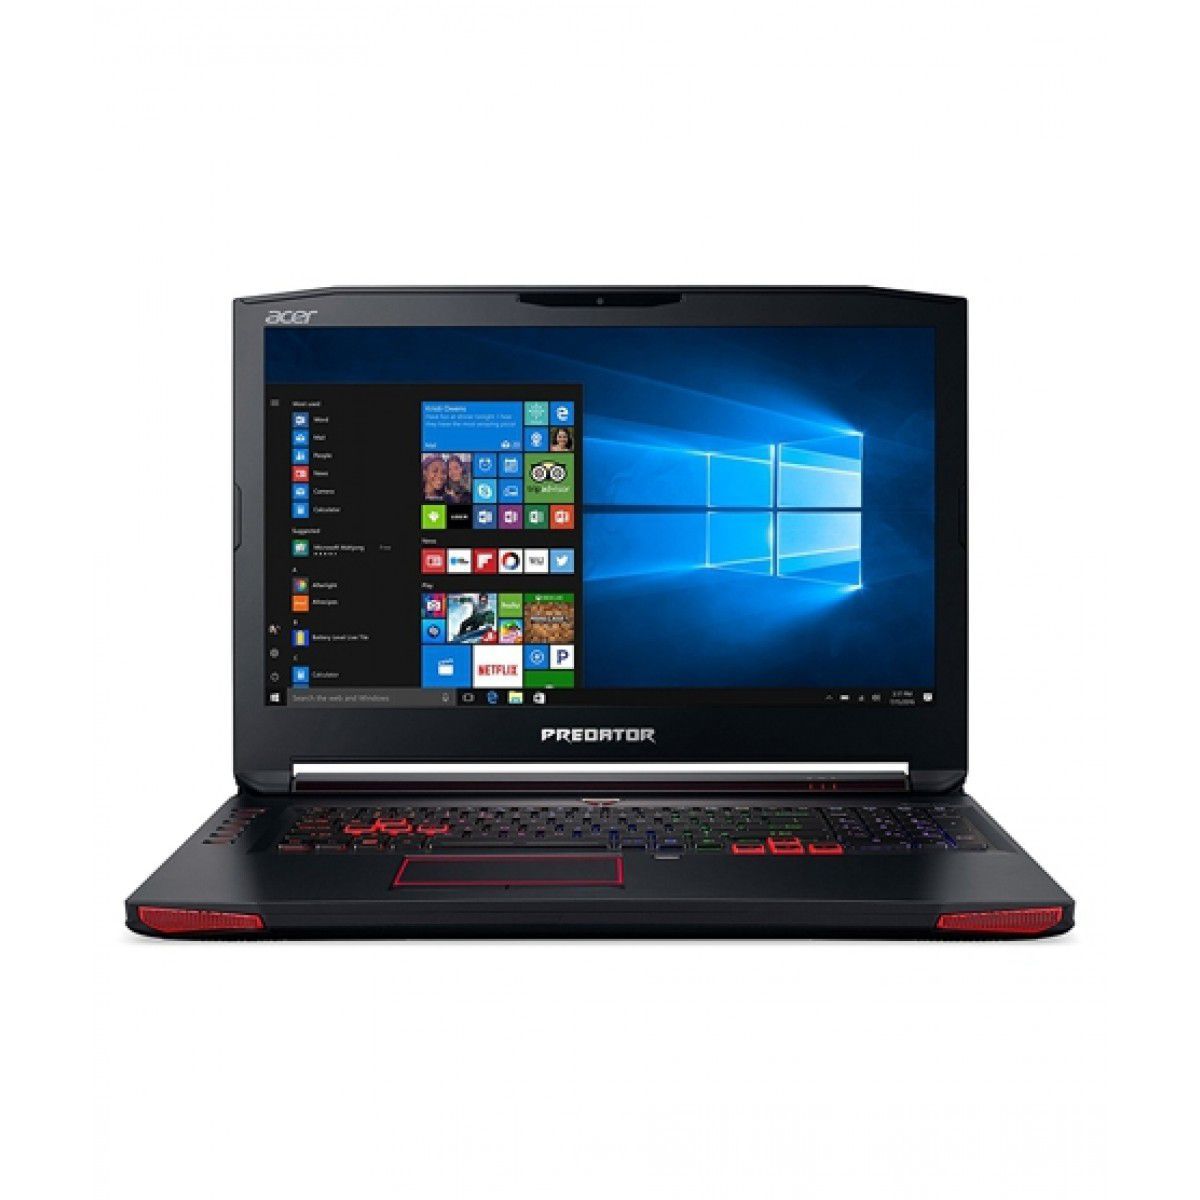 Acer Predator 17 Core i7 7th Gen Gaming Laptop (G9-793-79V5)